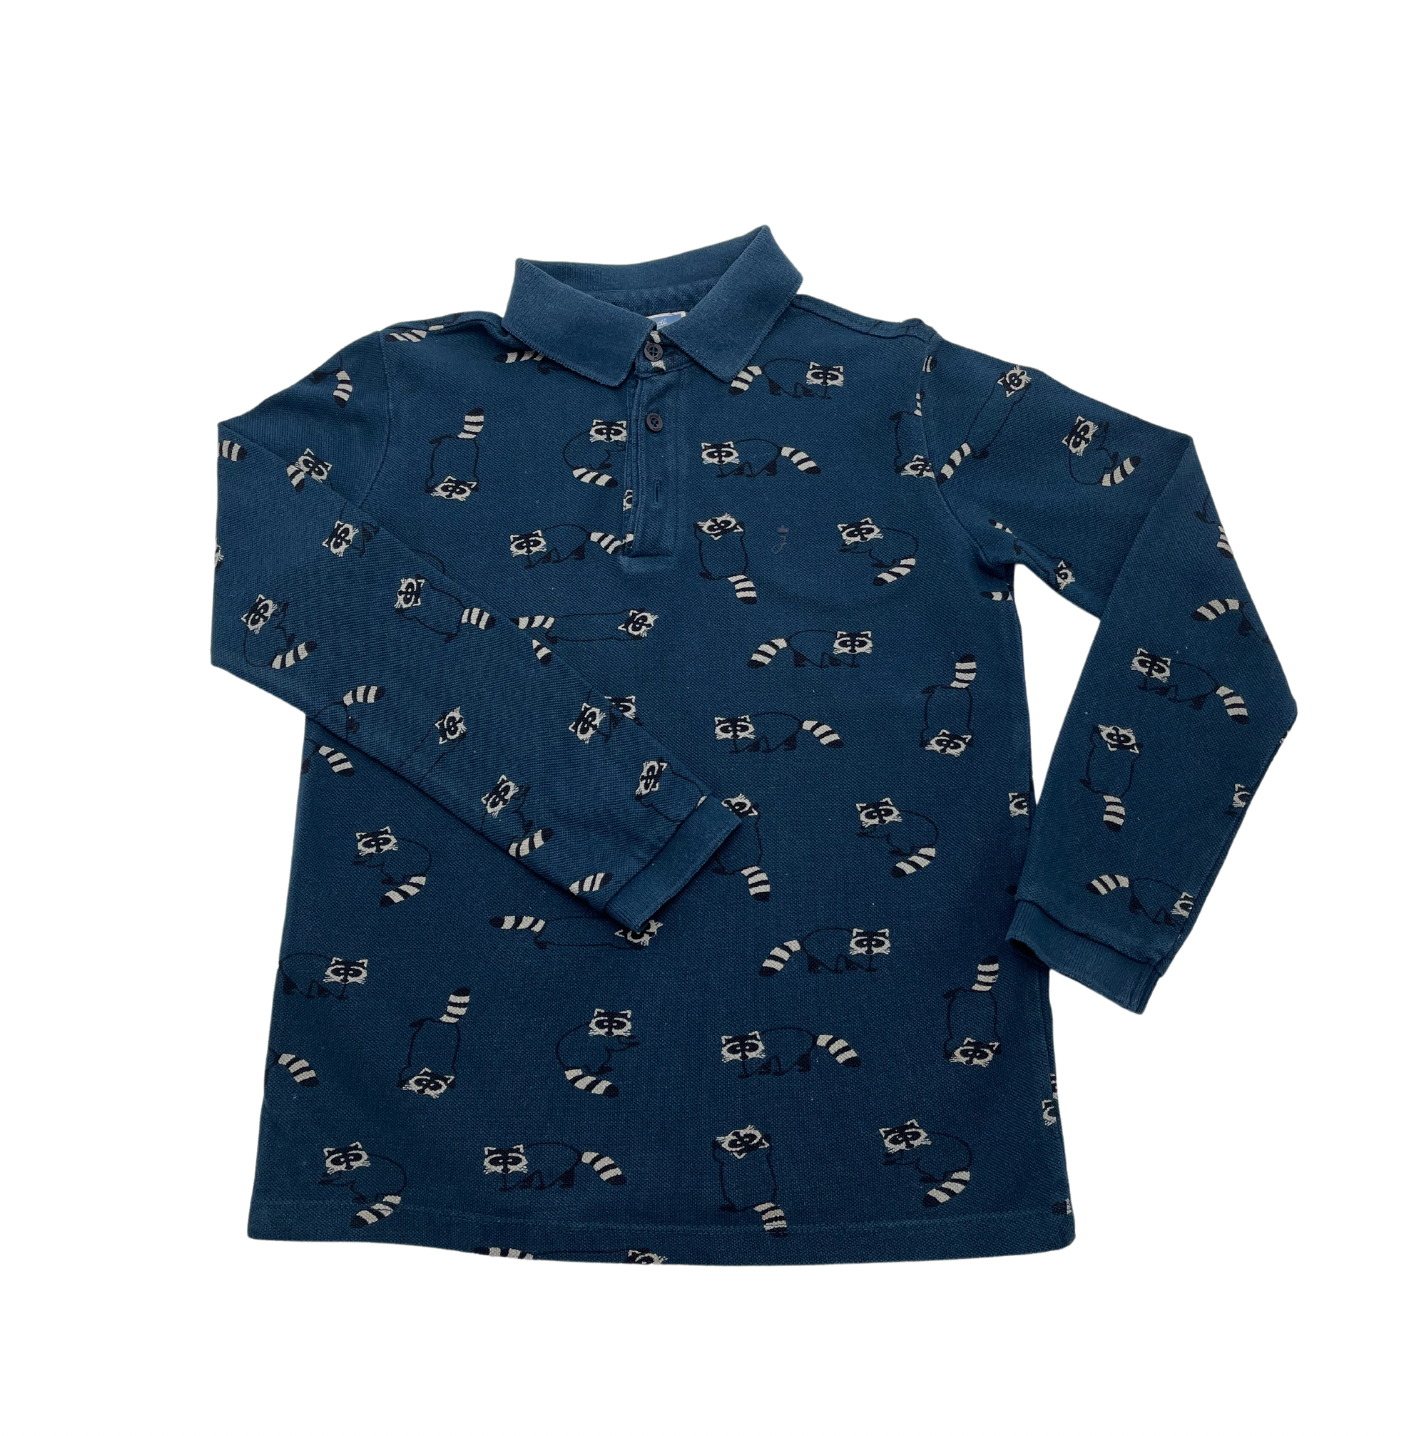 JACADI - Blue polo shirt with animal motifs - 8 years old